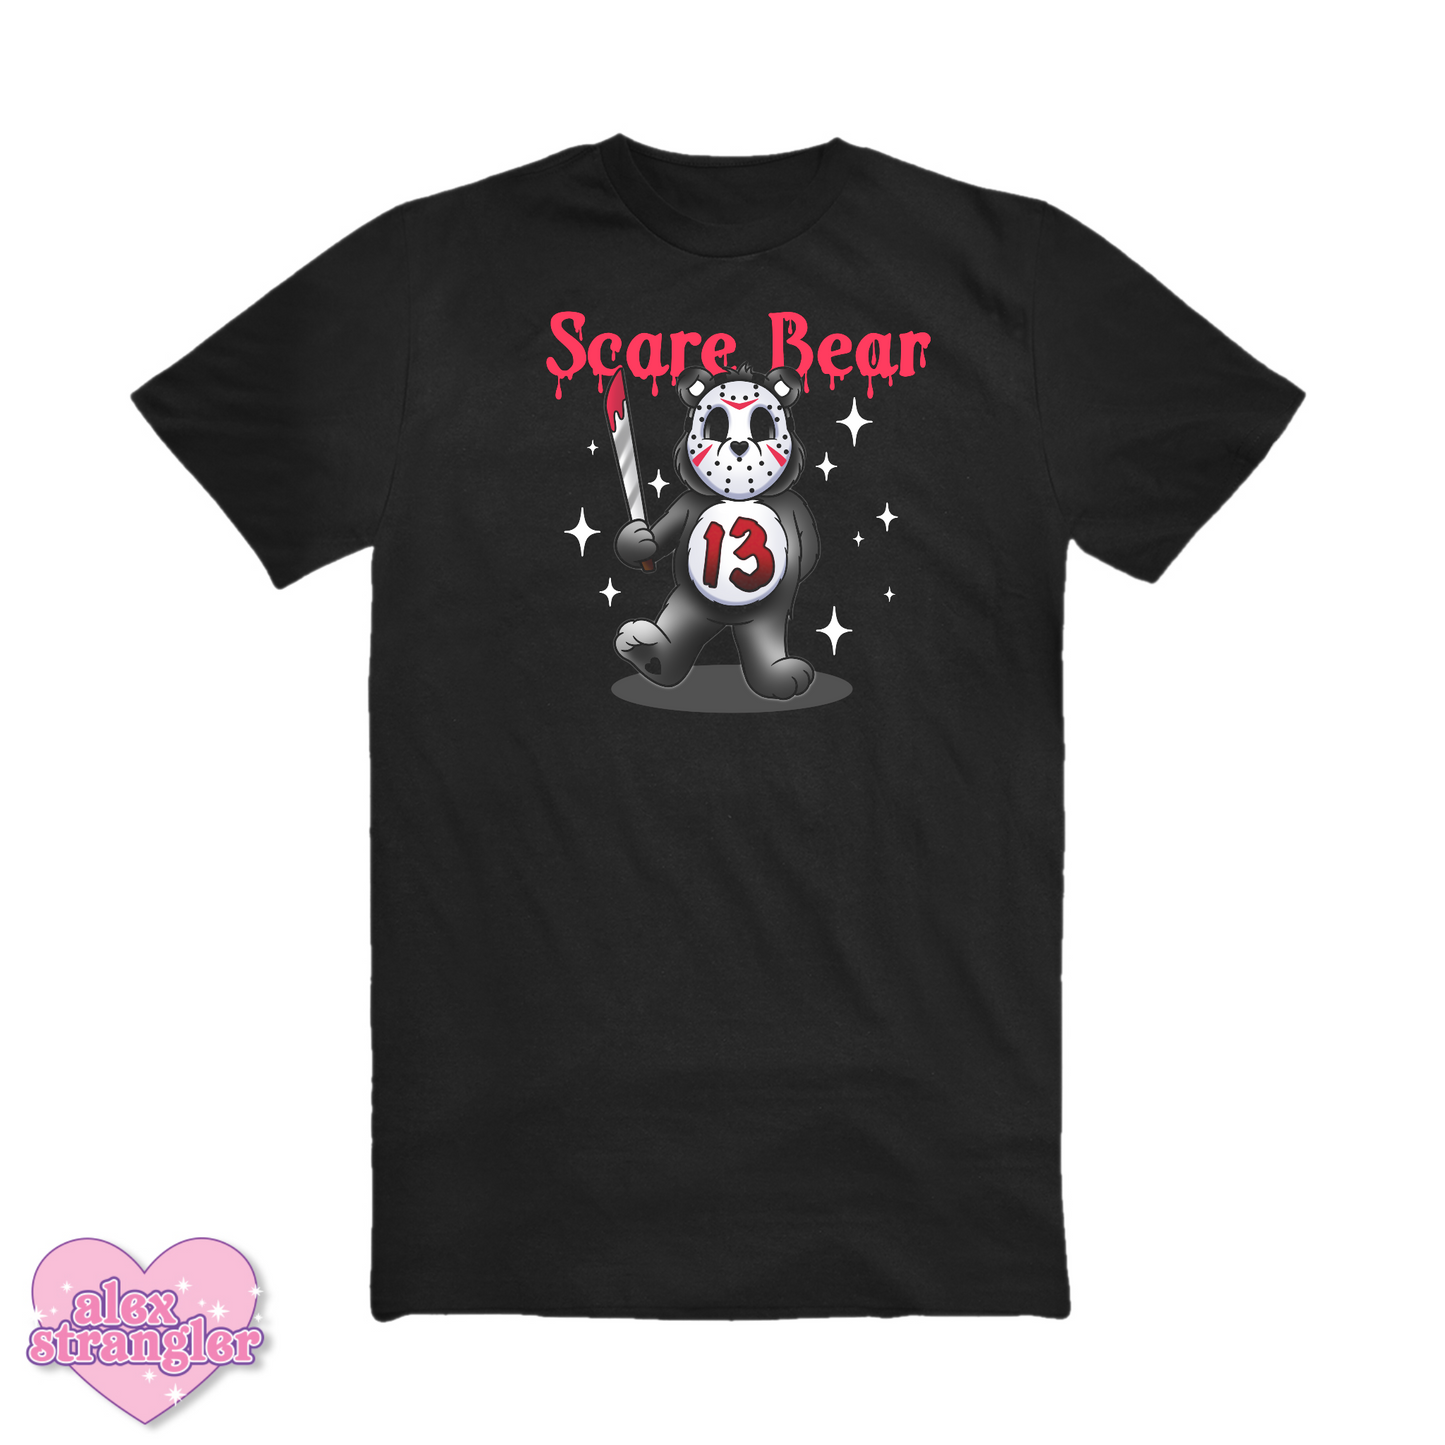 Scare Bear - Men's/Unisex Tee